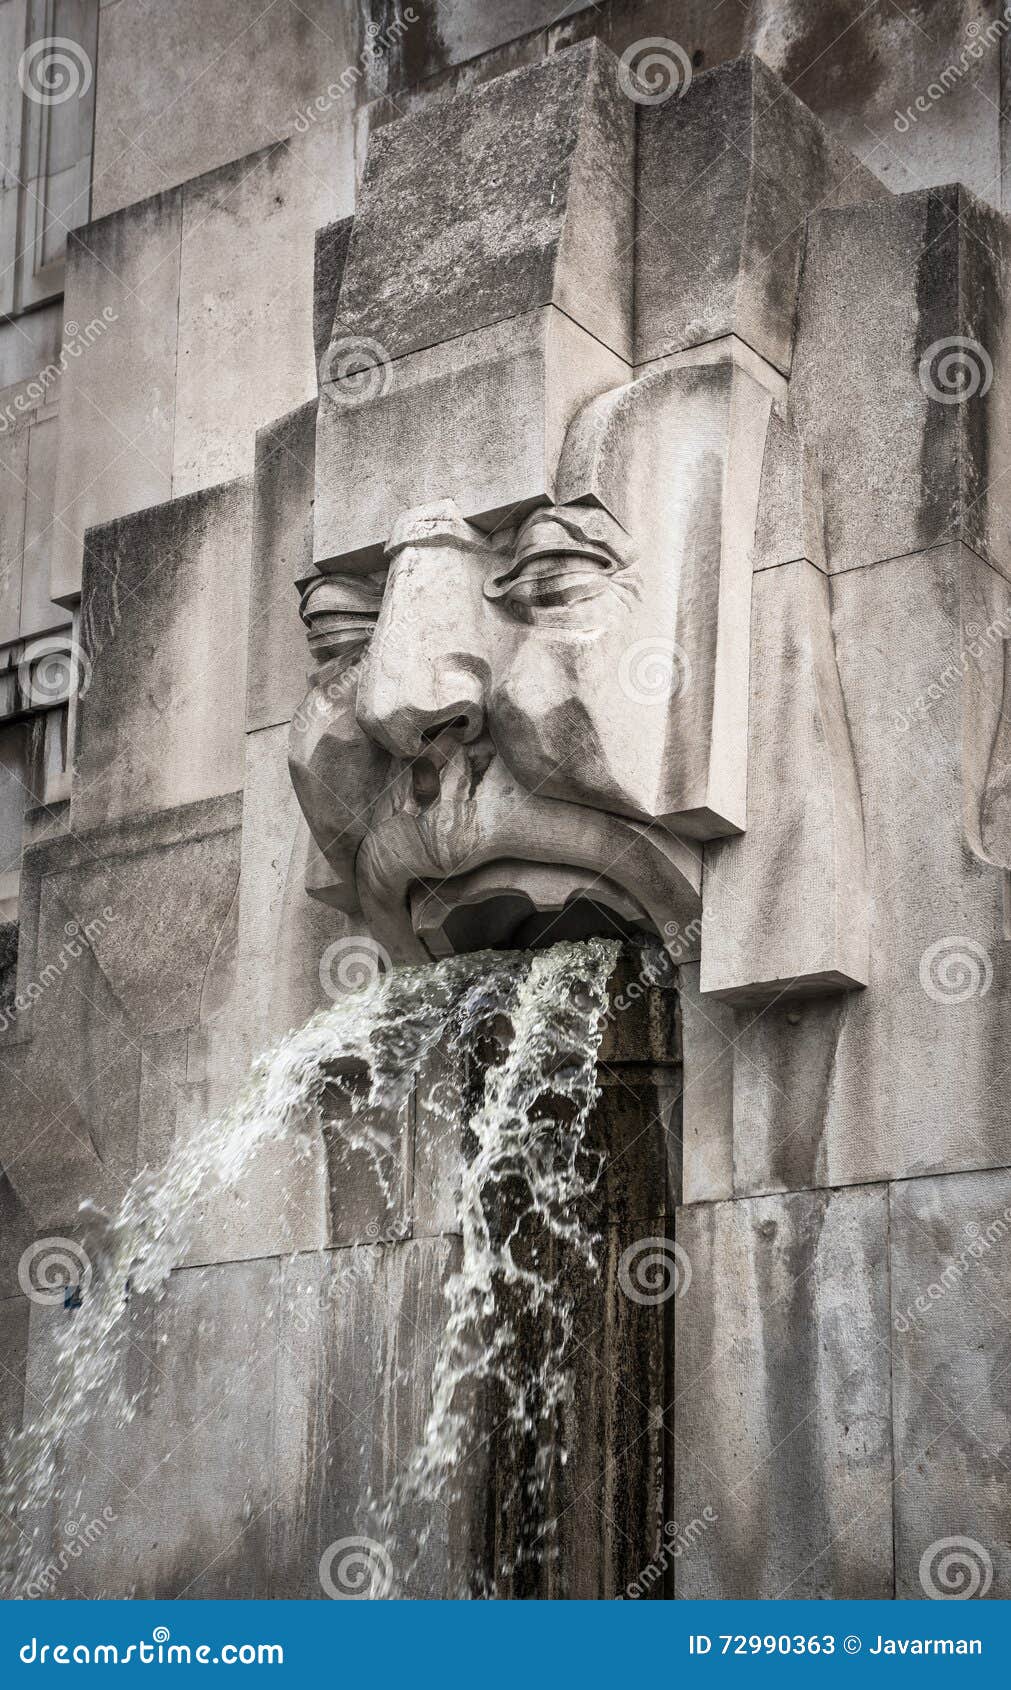 face fountain, milano centrale station, milan, italy